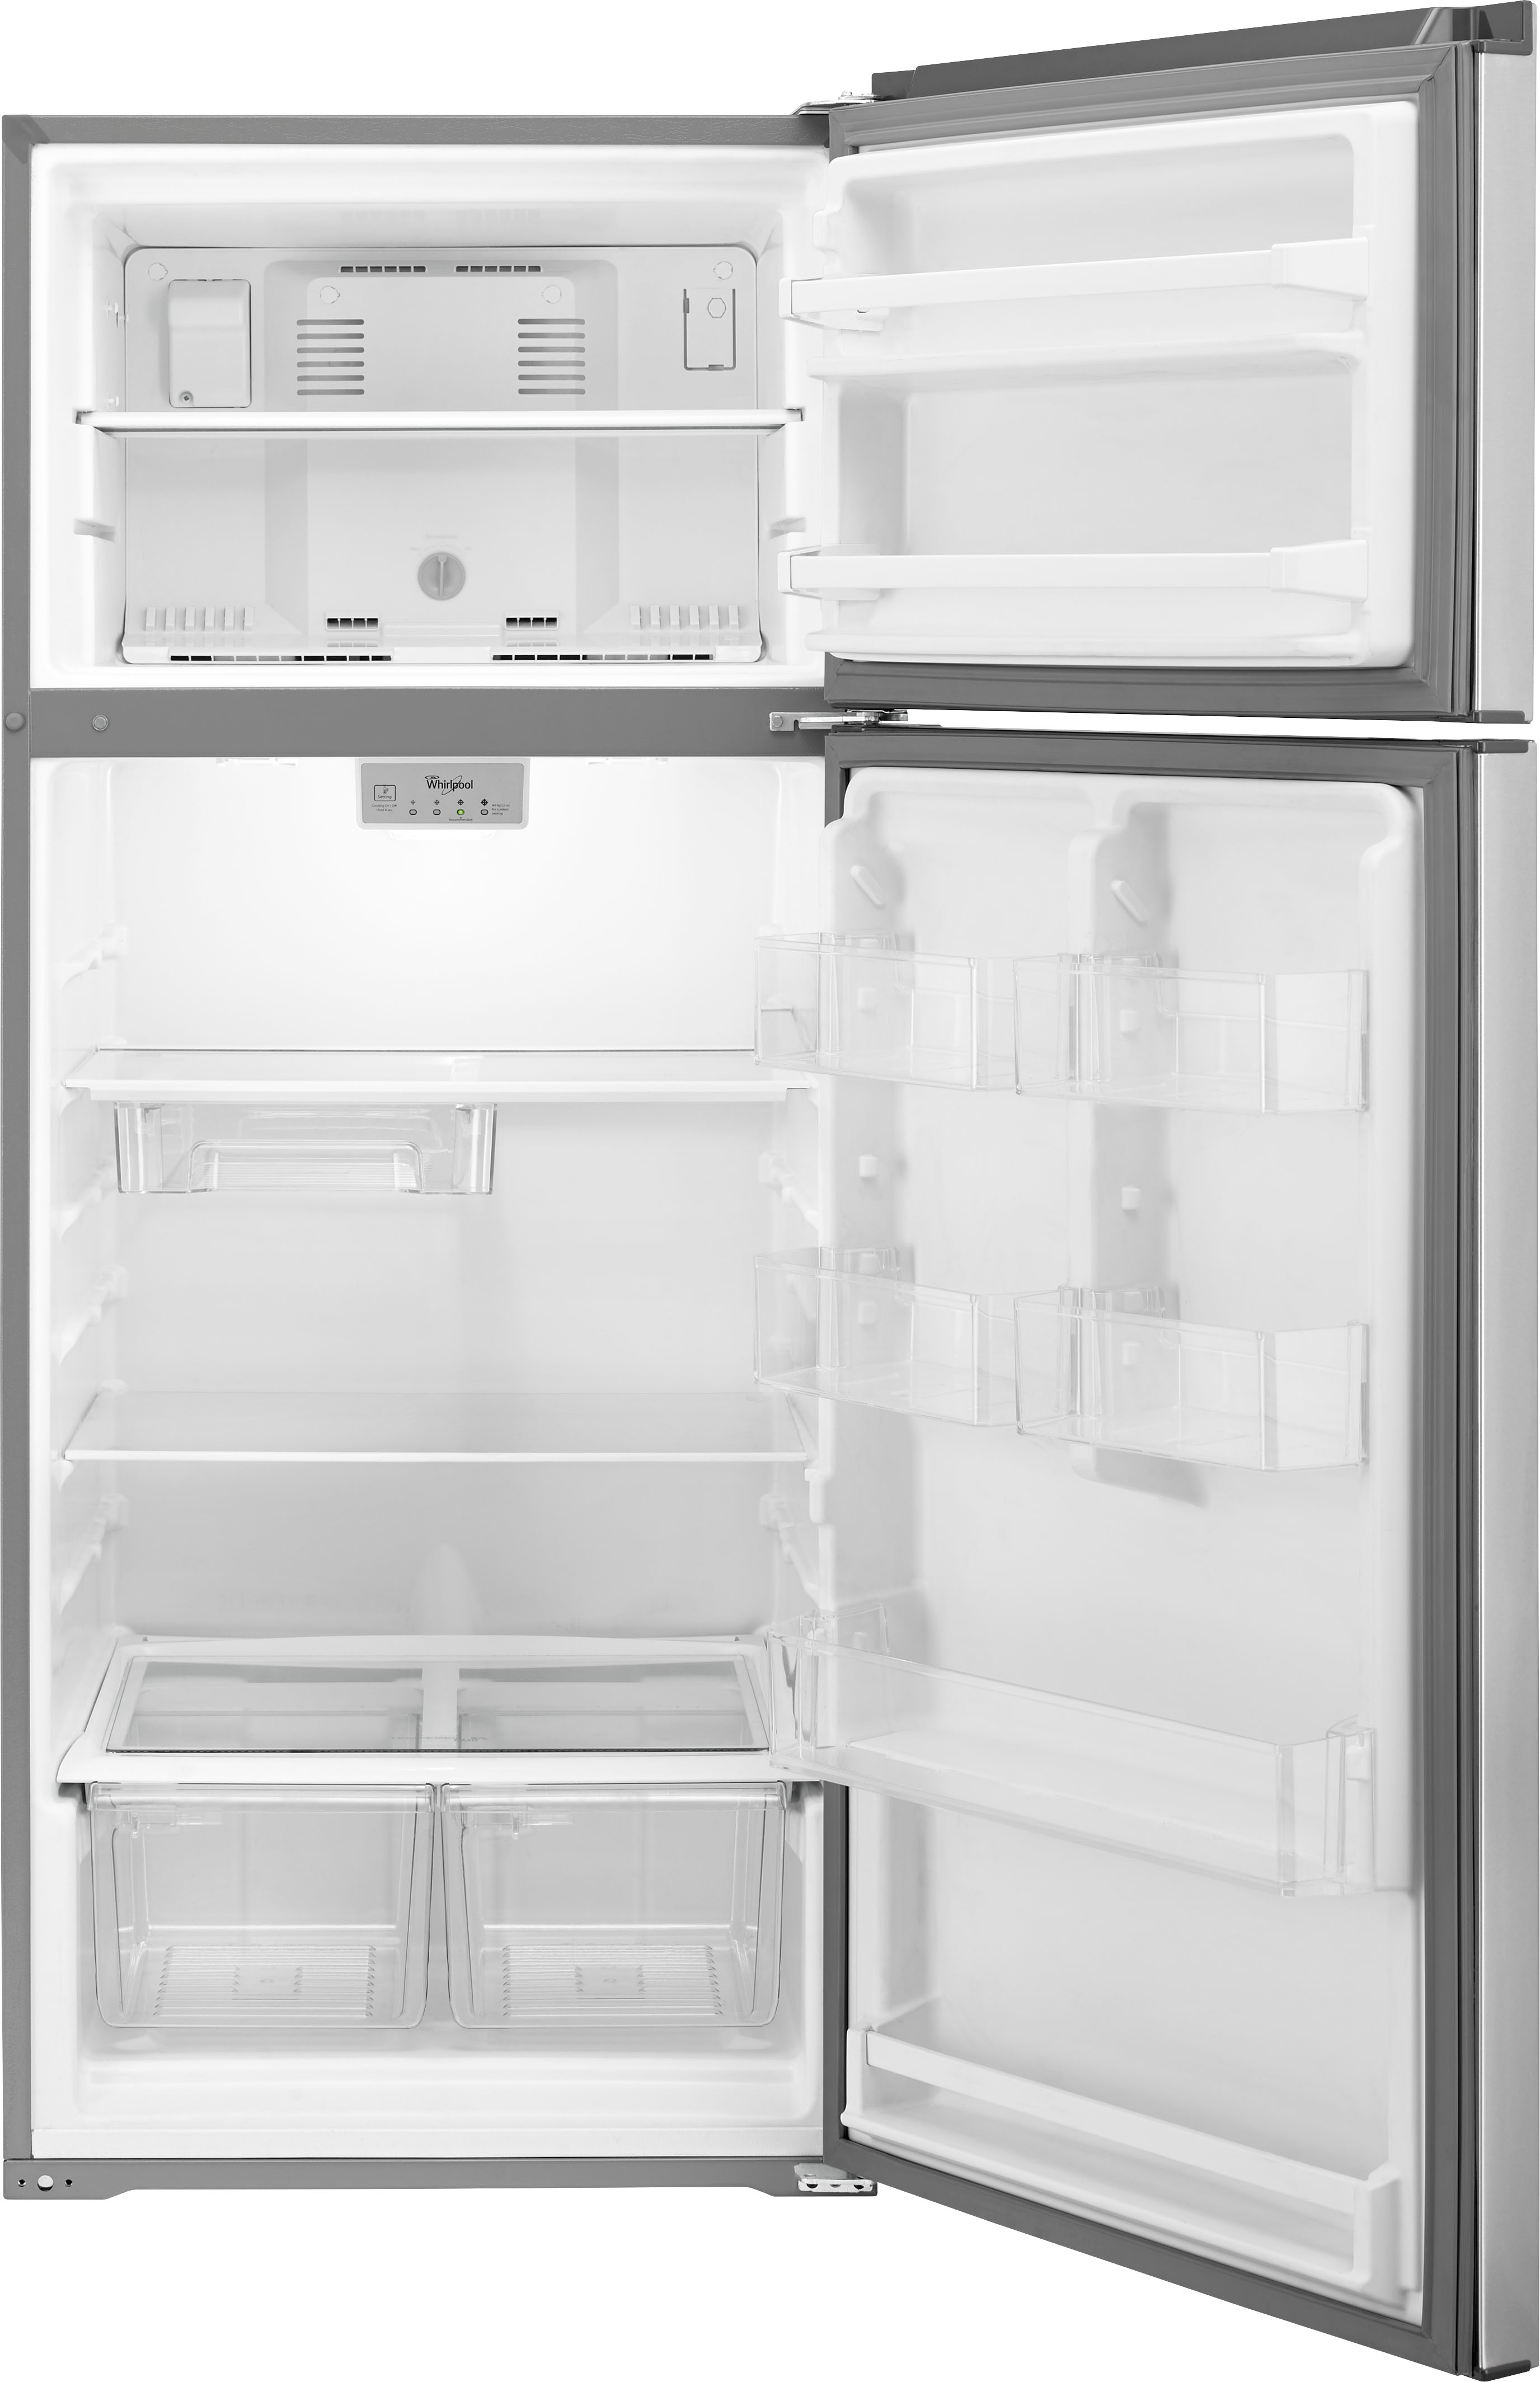 Whirlpool 17.7 Cu. Ft. Top-Freezer Refrigerator Monochromatic Stainless WRT518SZFM Best